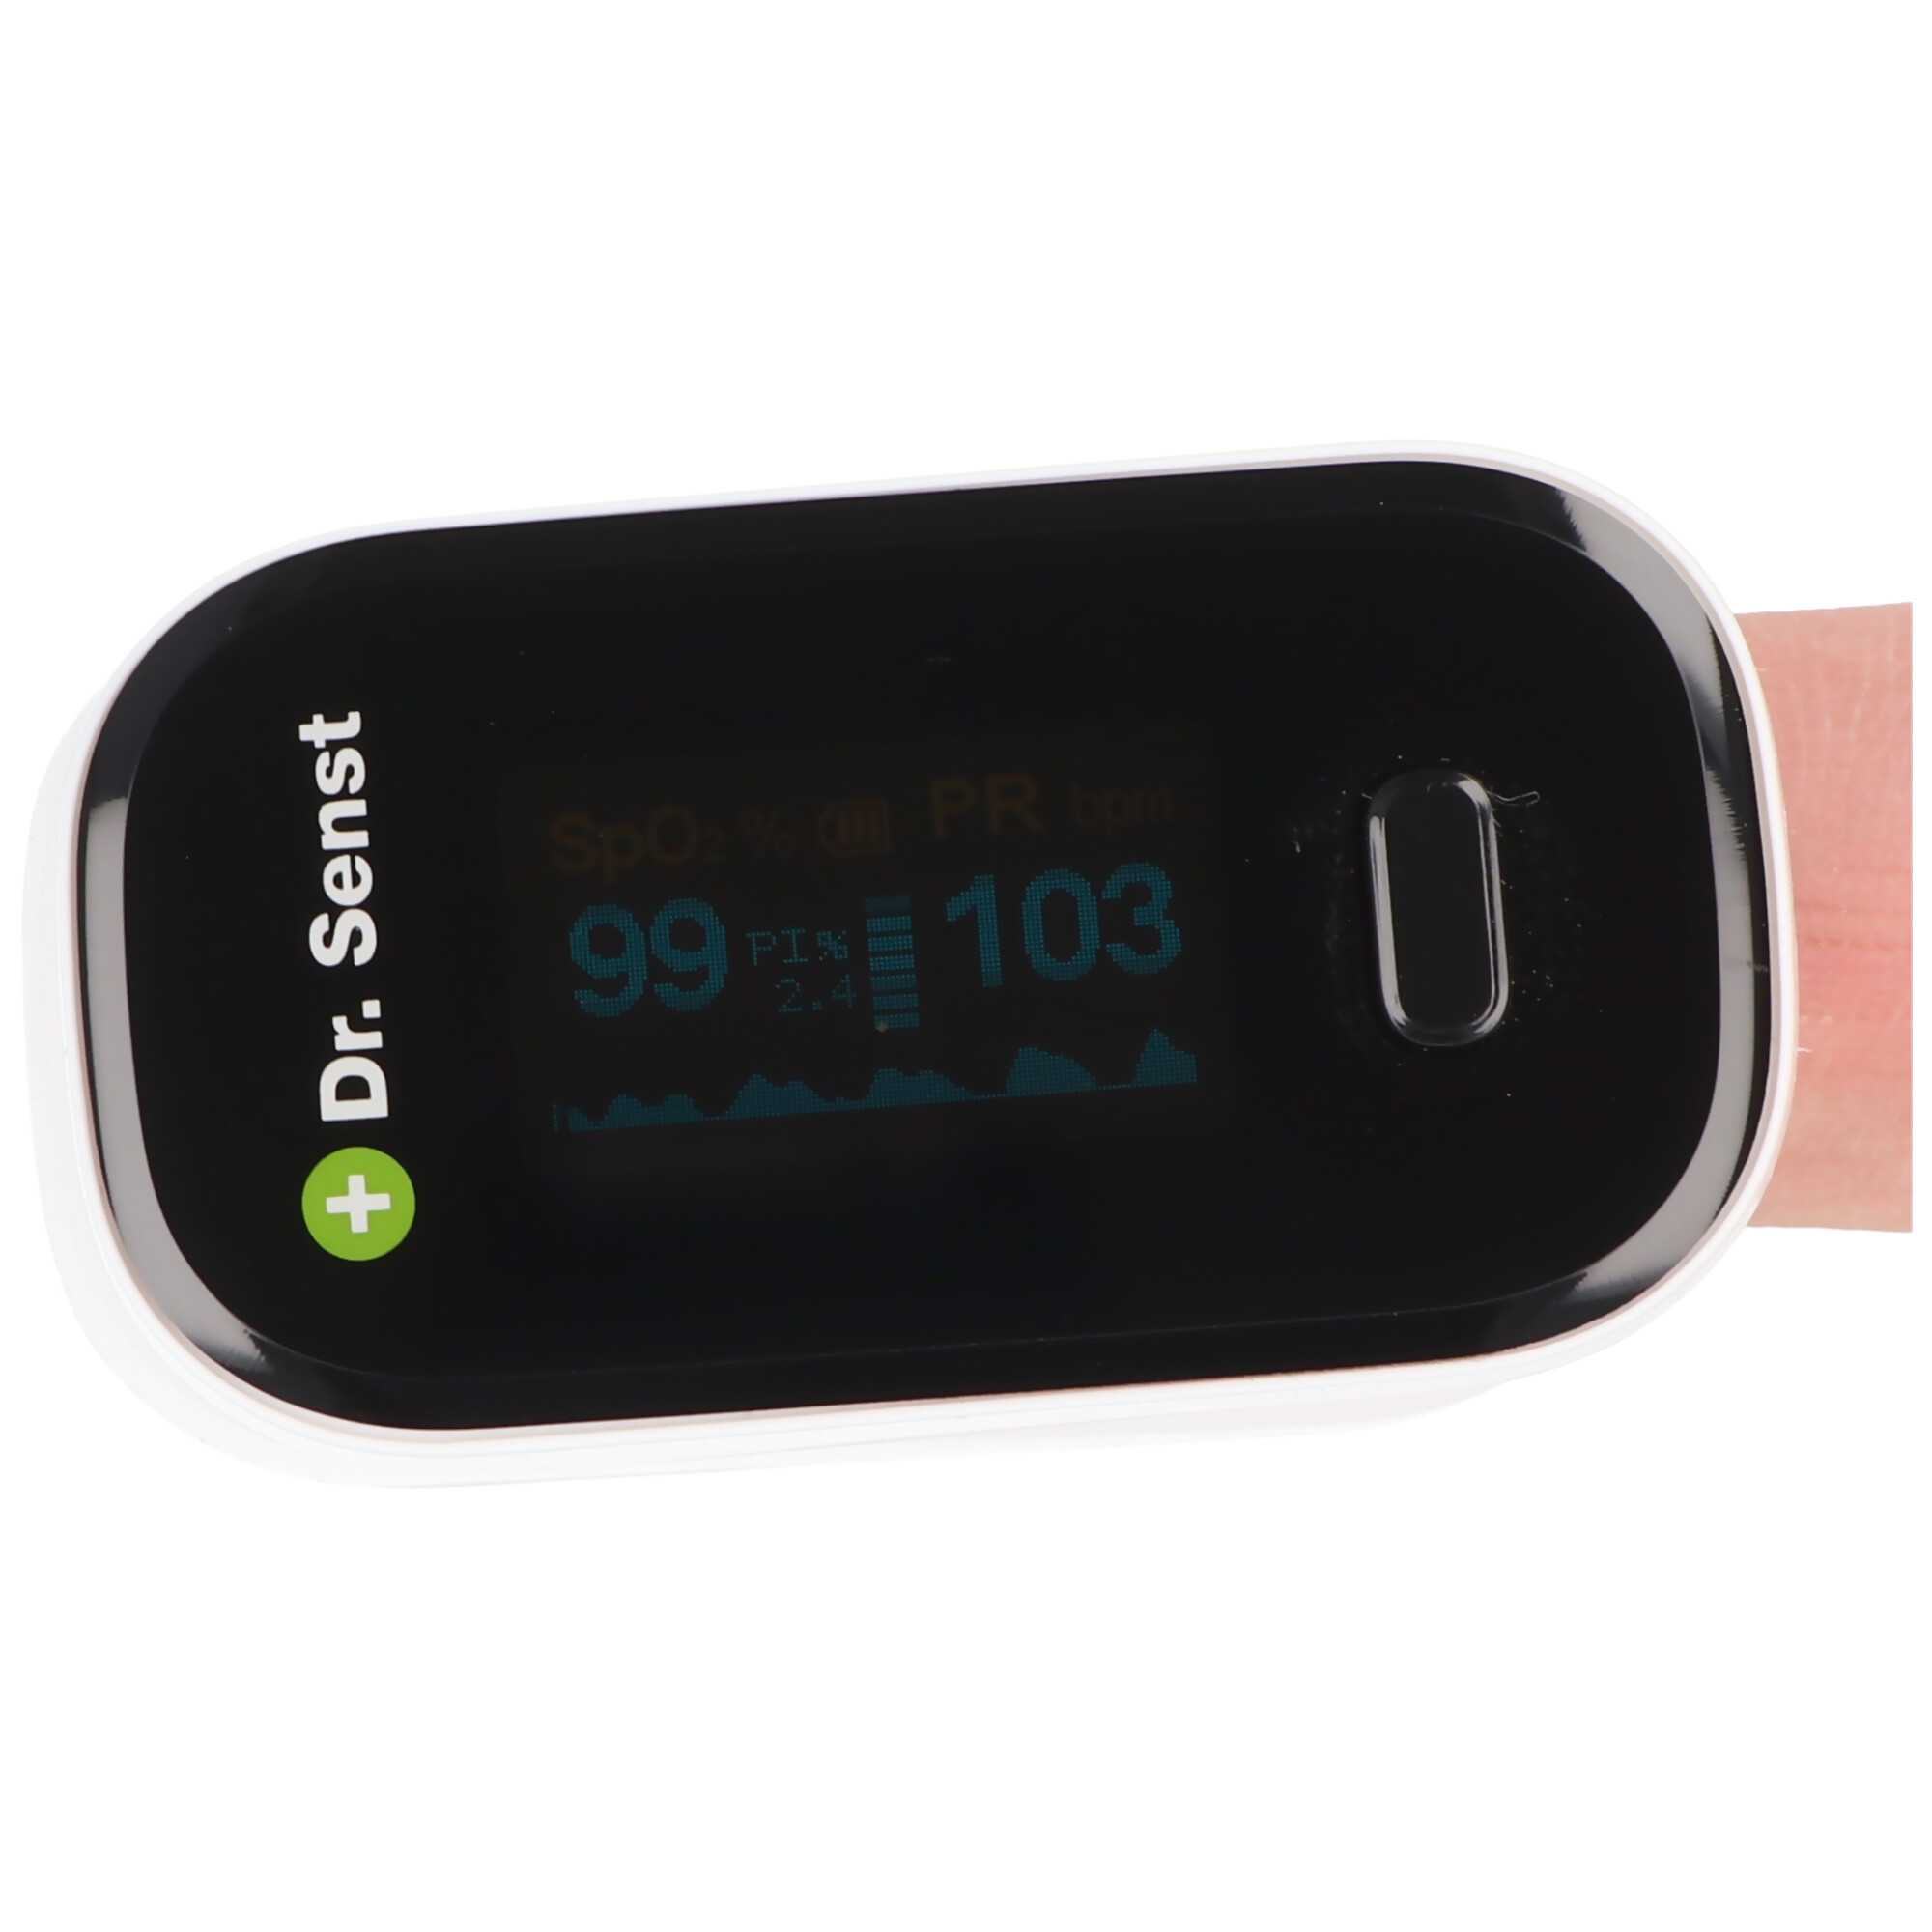 Dr. Senst® Fingerspitzen Pulsoximeter YK-80B inkl. Batterien